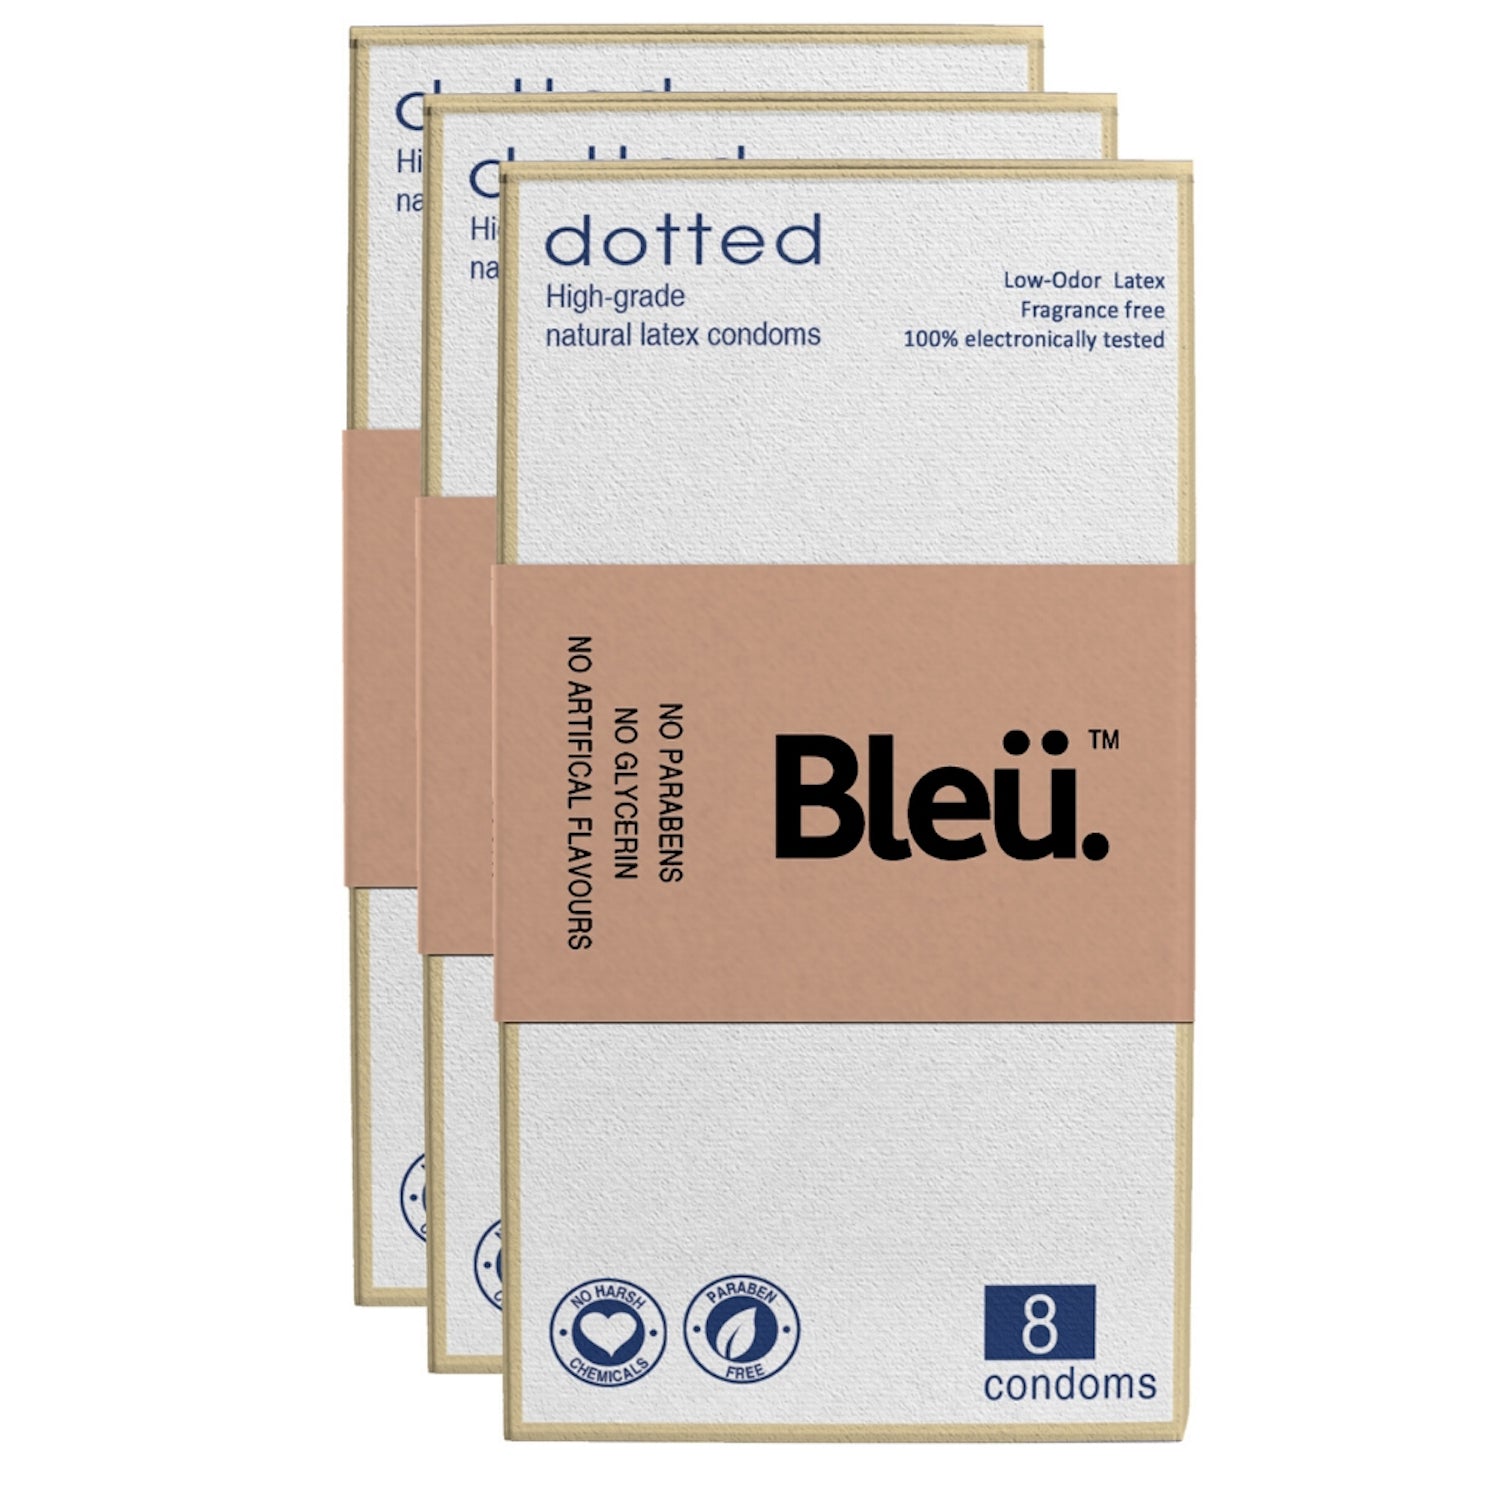 Bleu Natural Latex Paraben-Free Premium Dotted Condom (8 Condoms, Pack Of 3)